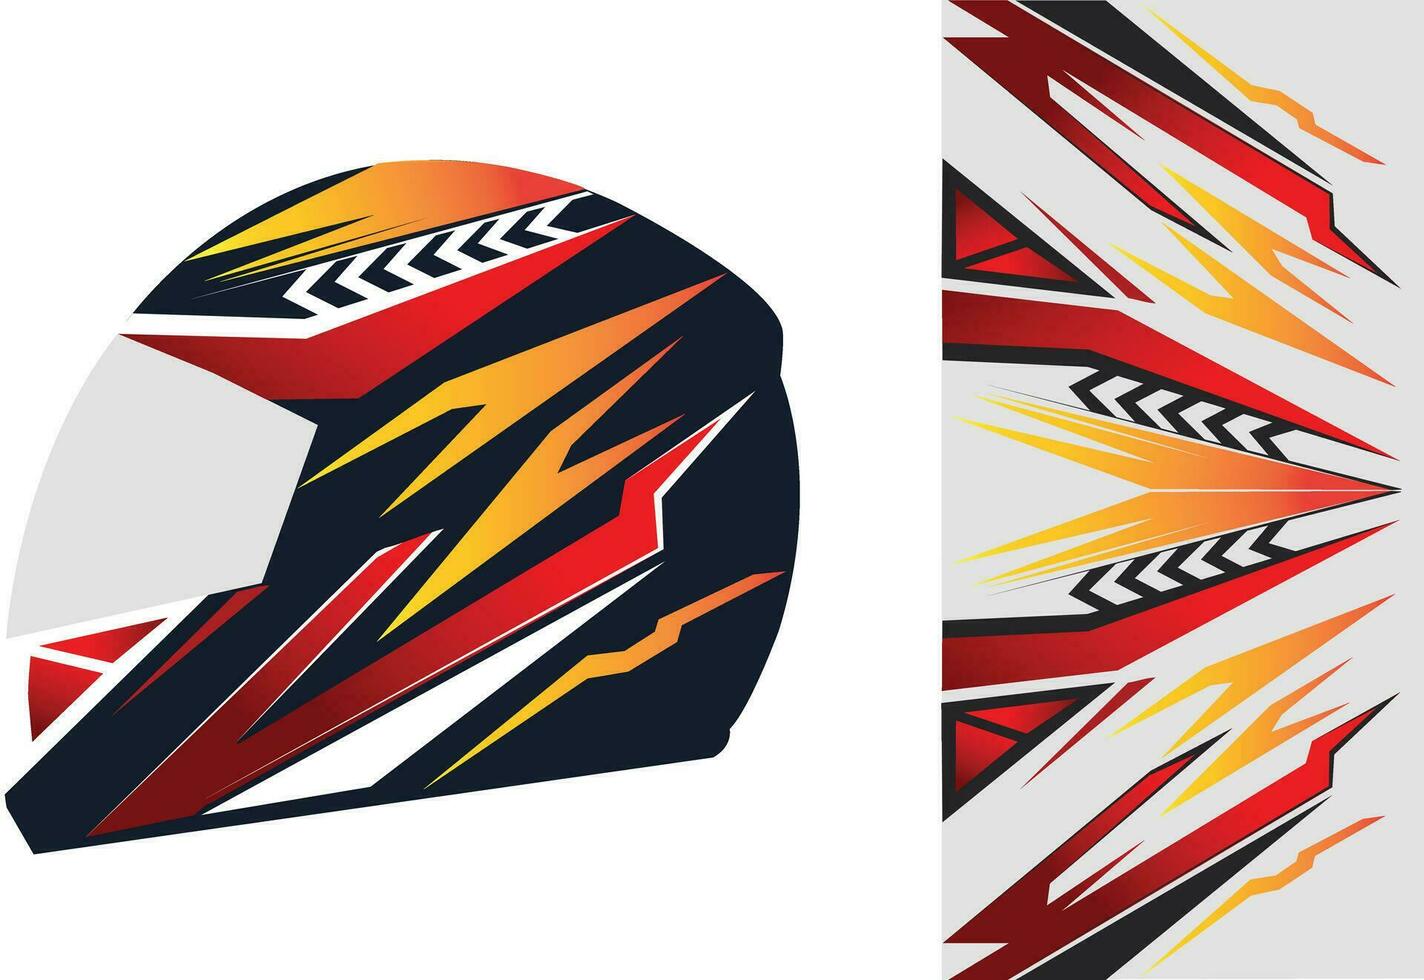 Racing helmet wrap decal and vinyl sticker design illustration vector